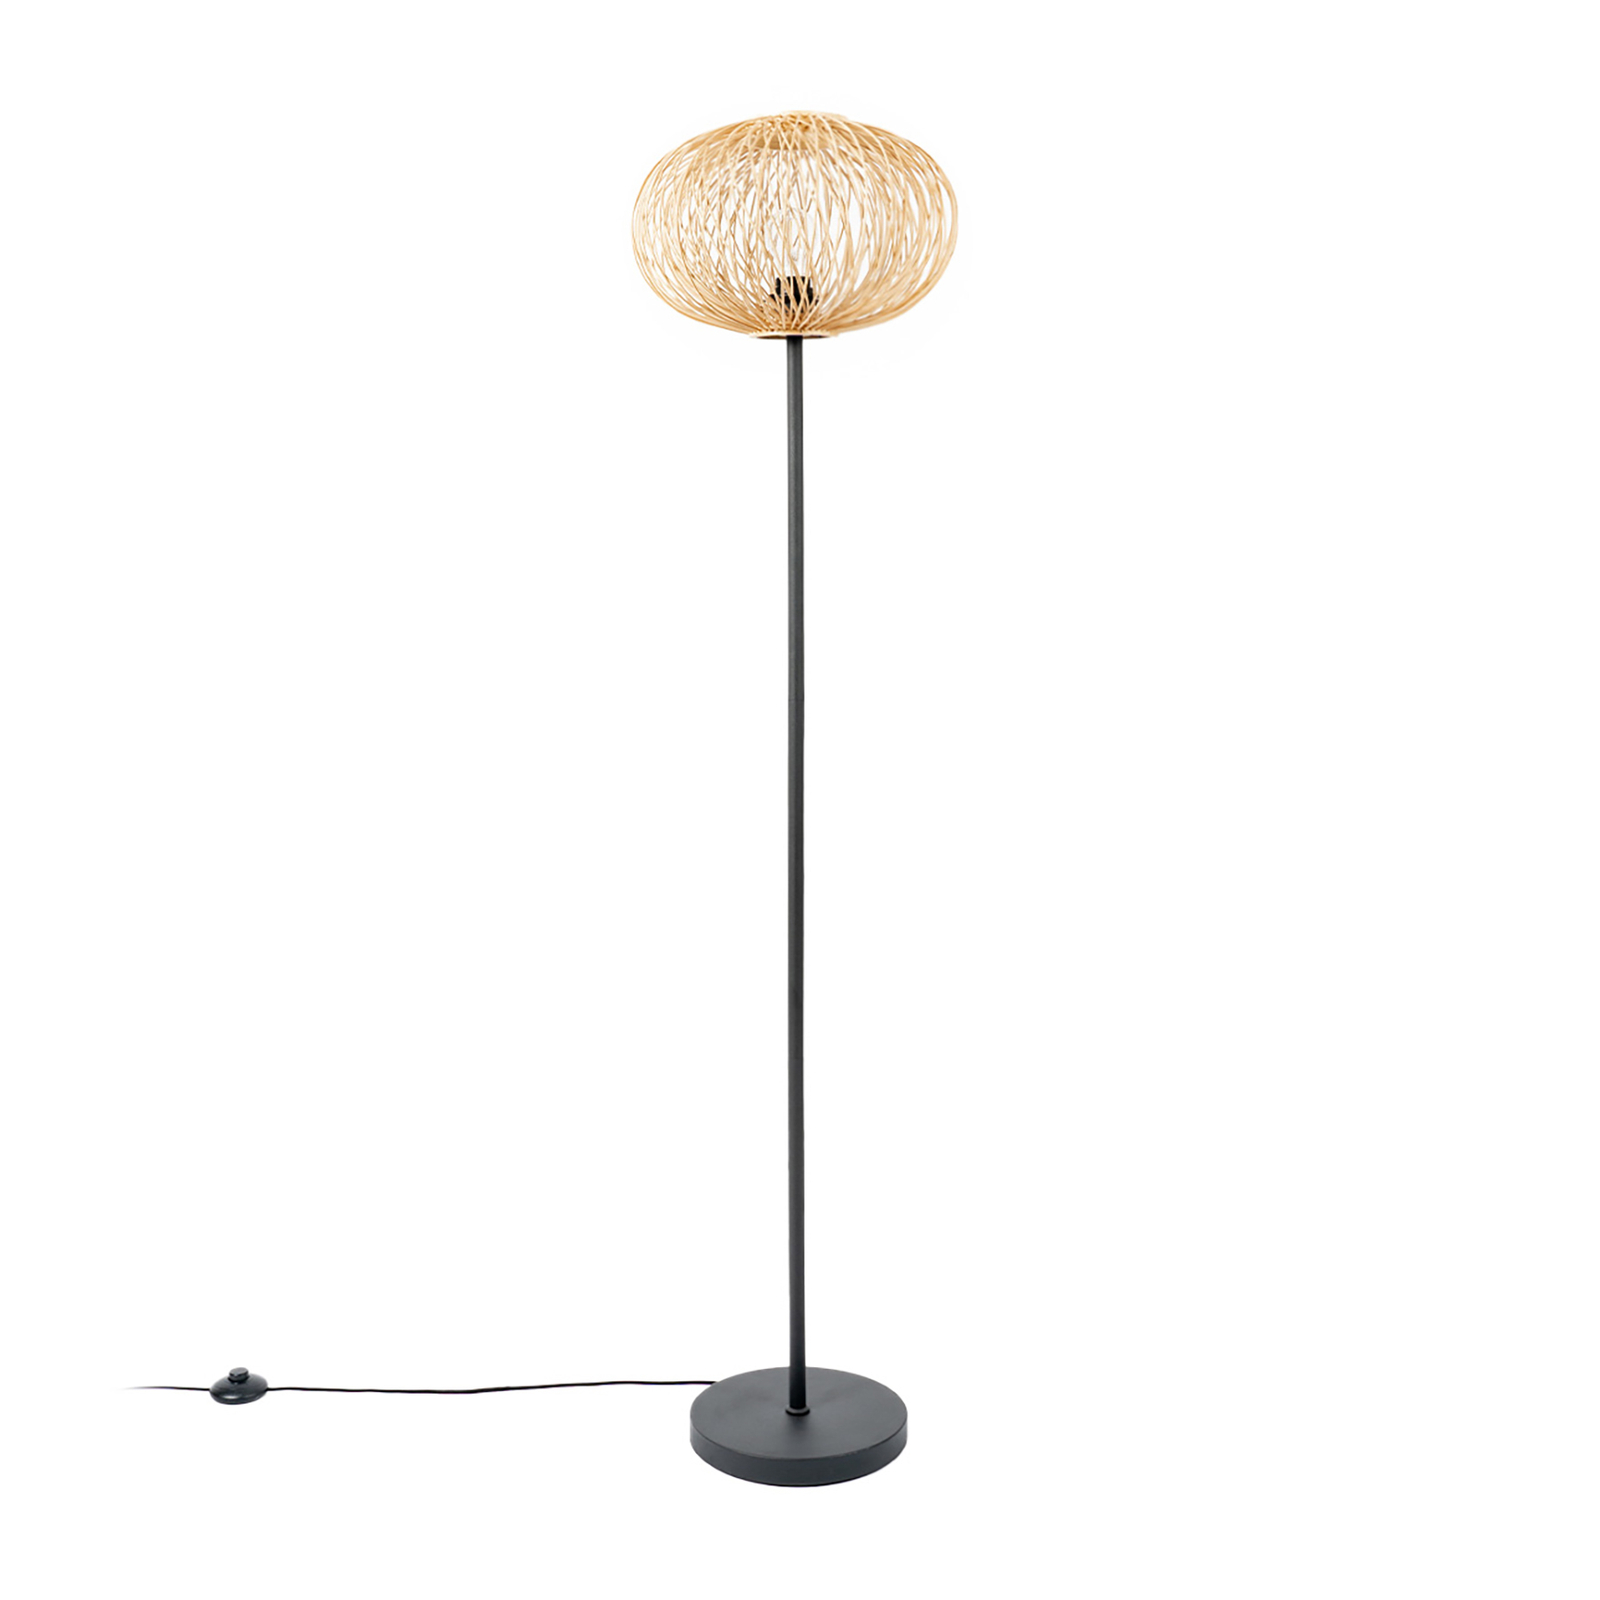 Lindby Solvira vloerlamp, bamboe vlechtwerk, rond